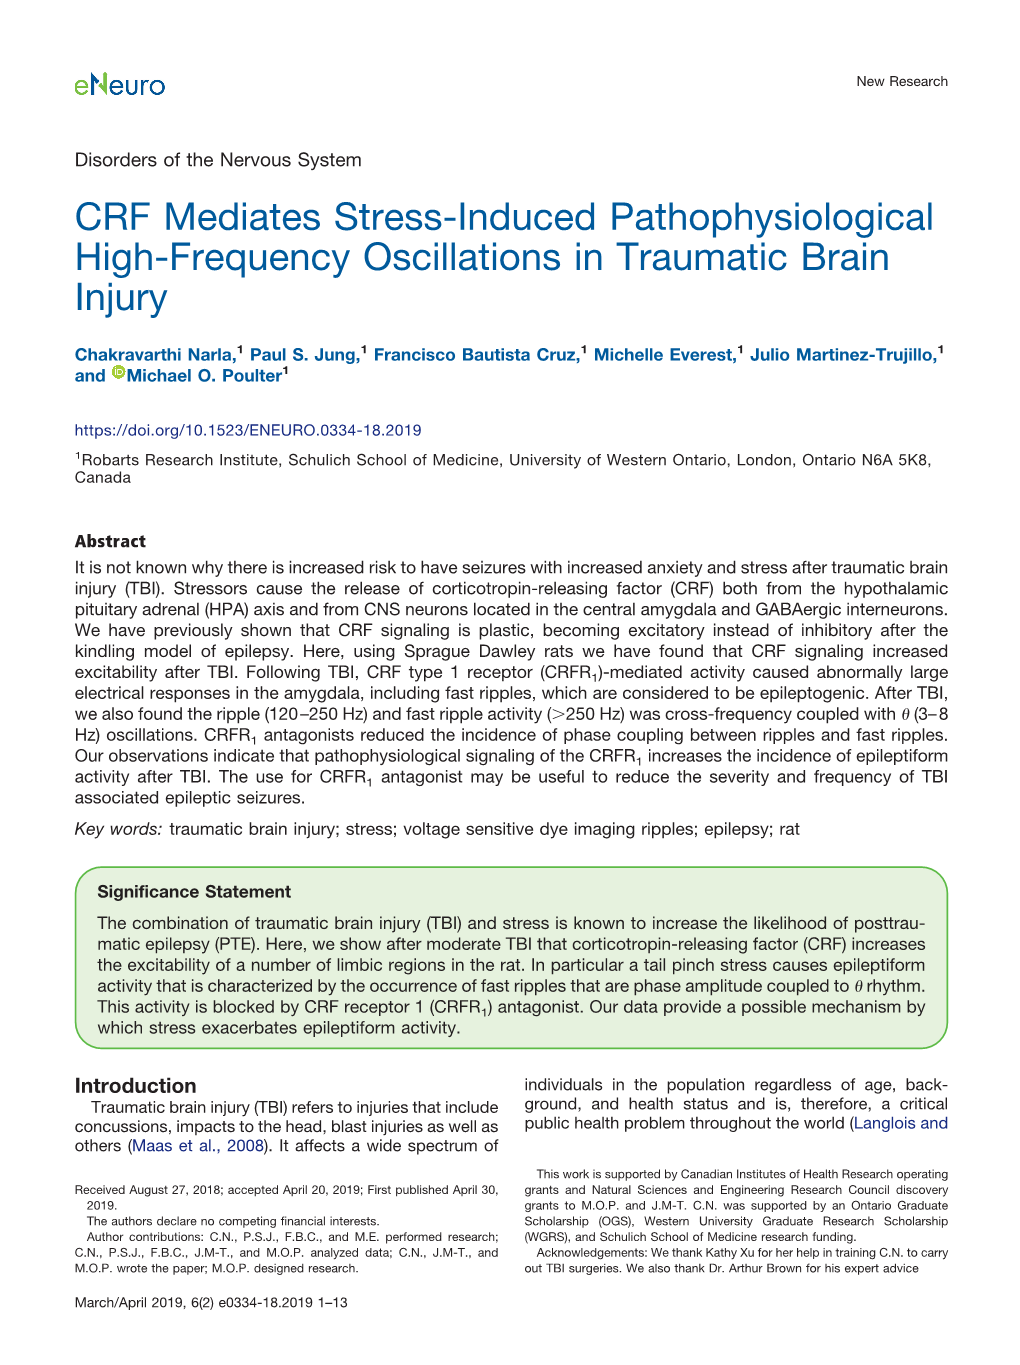 CRF Mediates Stress-Induced Pathophysiological High-Frequency Oscillations in Traumatic Brain Injury